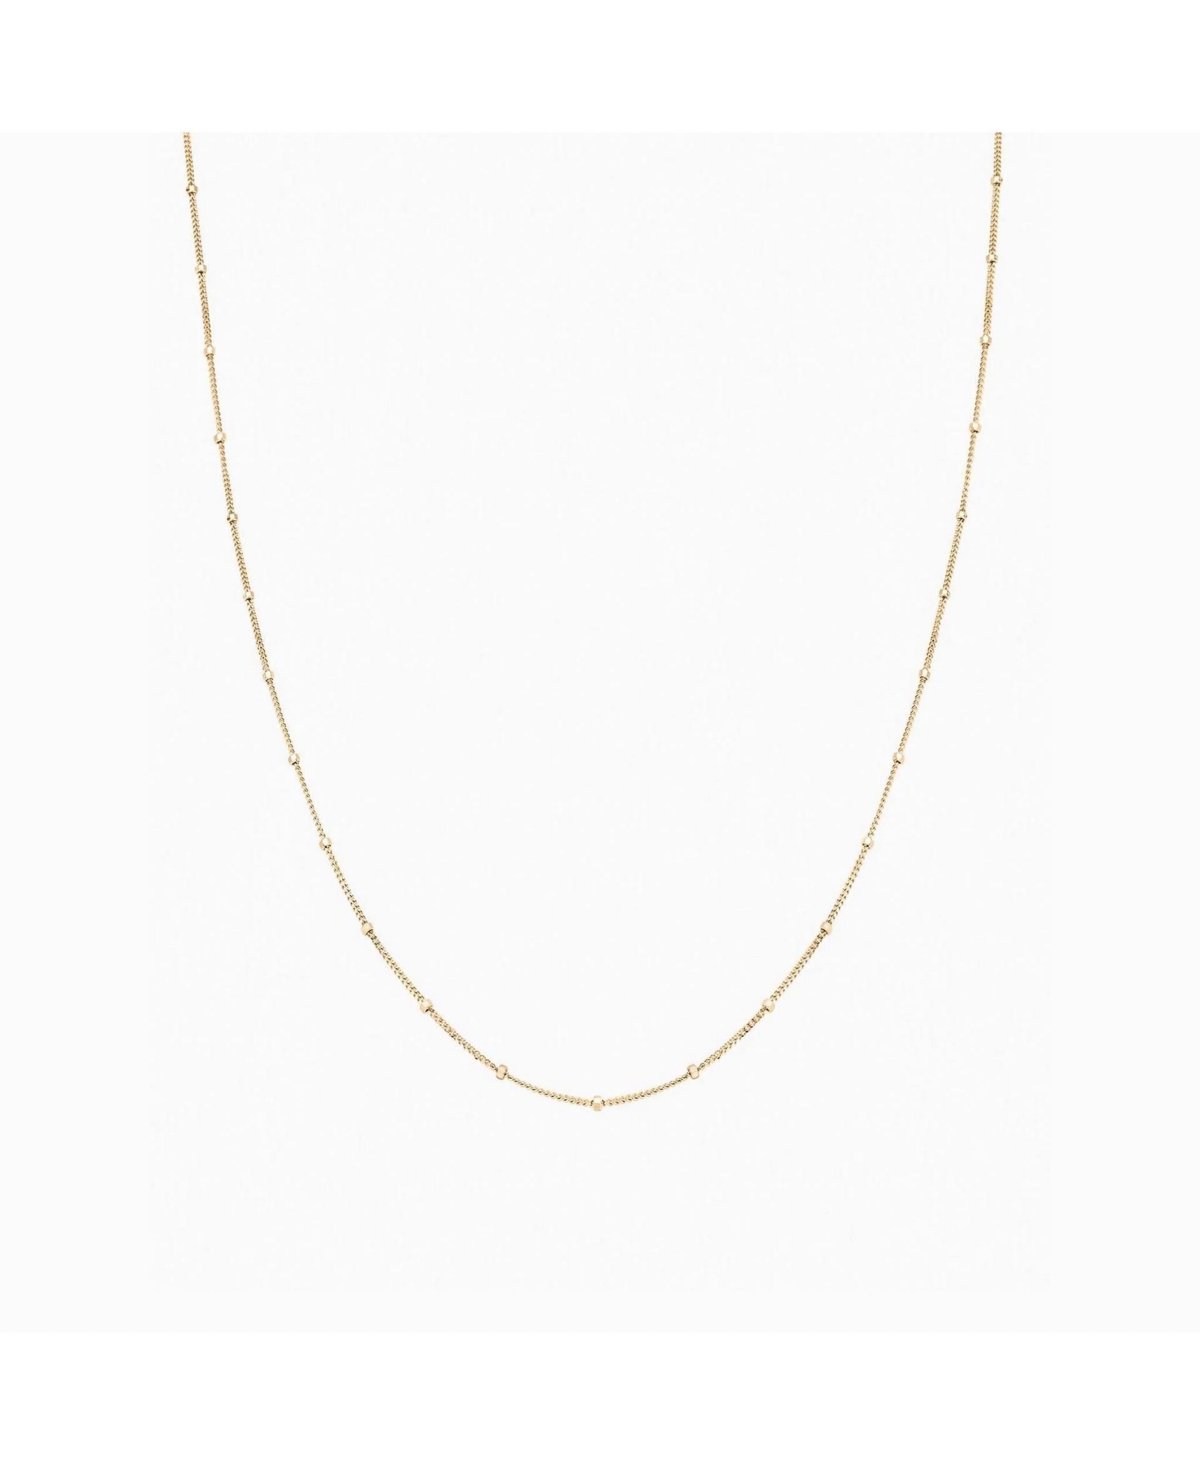 Savannah Basic Chain Necklace - Yellow gold